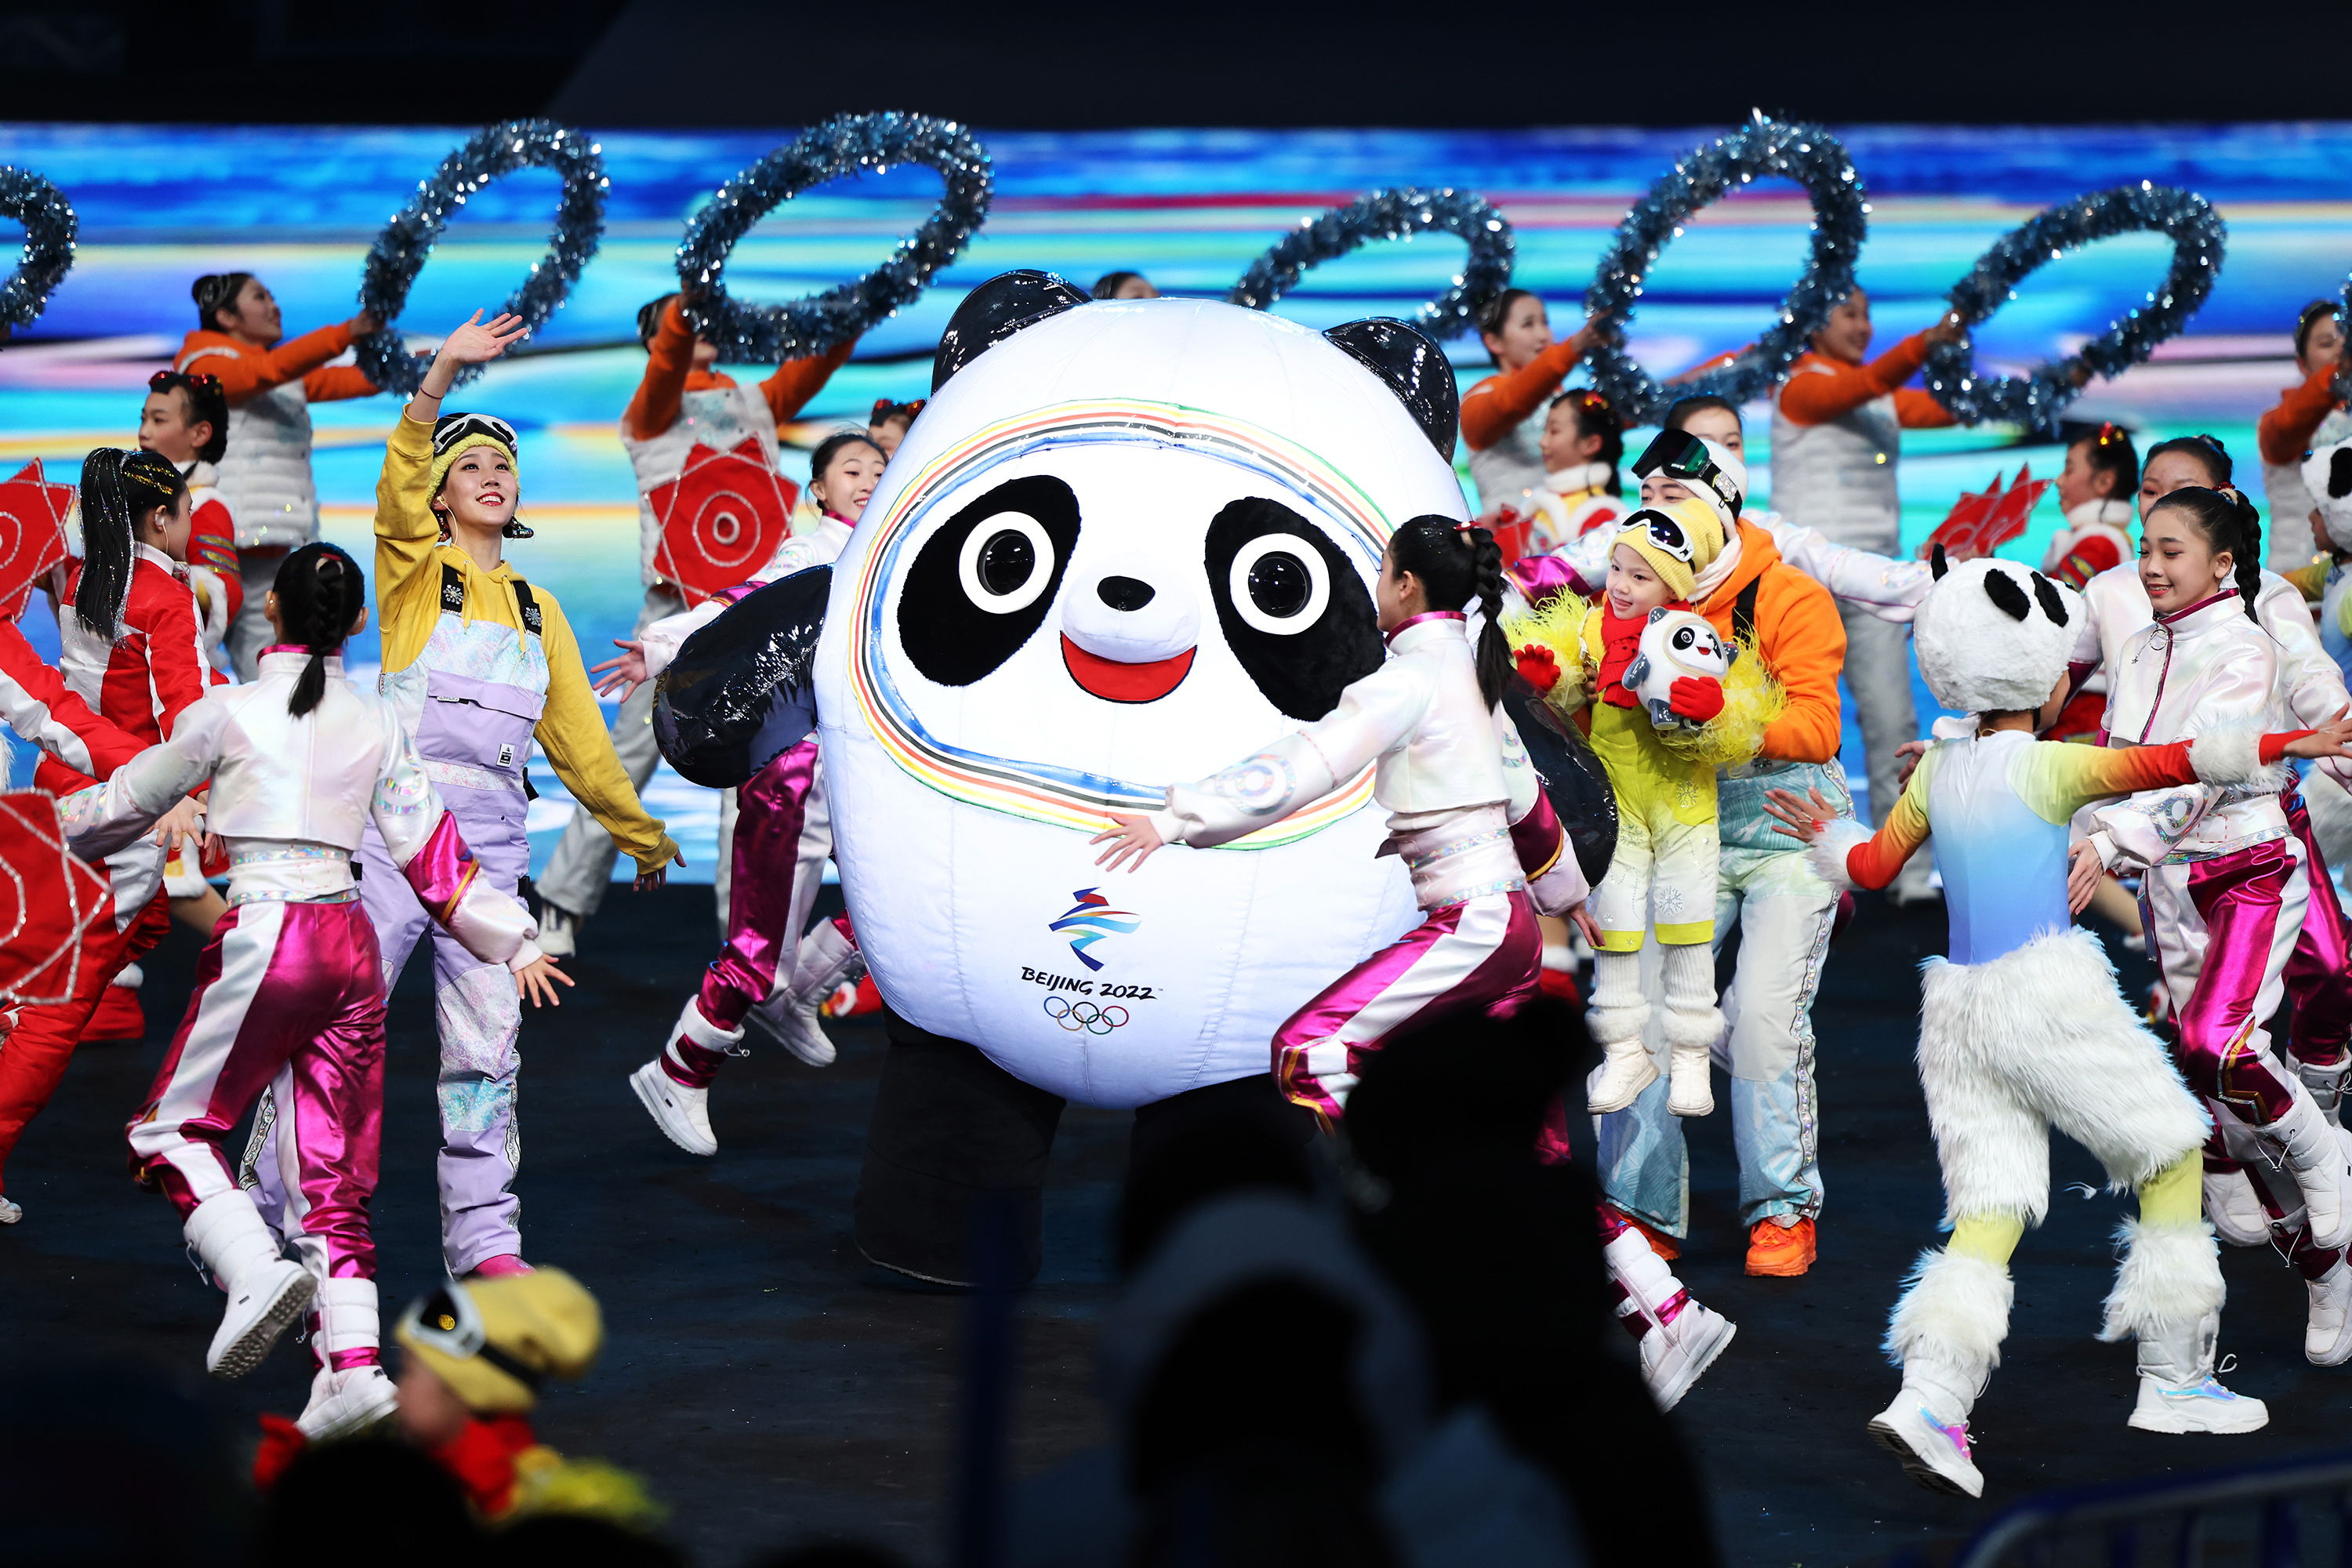 Beijing 2022 Winter Olympic mascot Bing Dwen Dwen is seen during the opening ceremony.